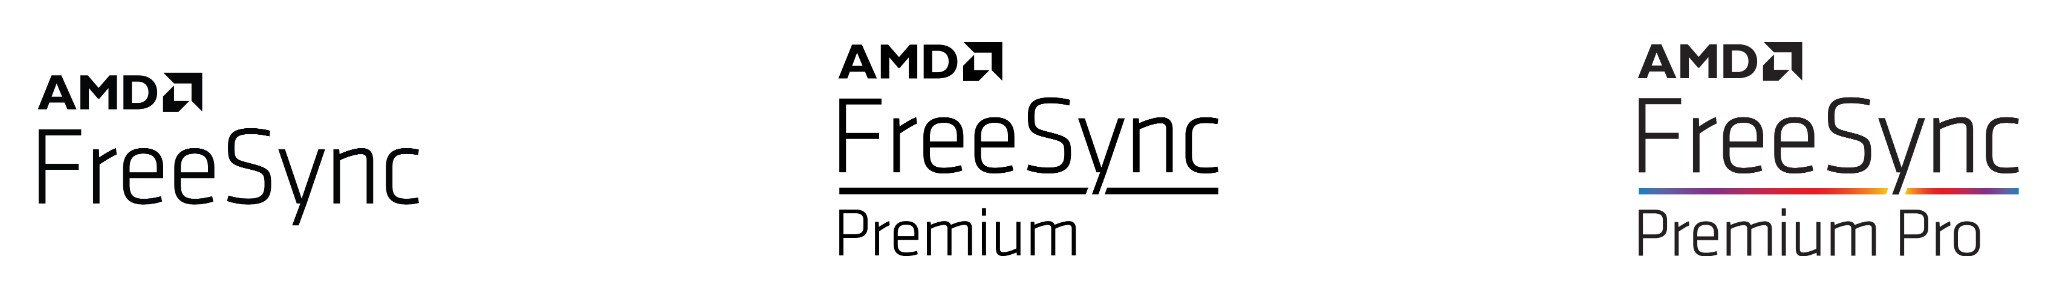 AMD FreeSync Versionen - Premium und Premium Pro